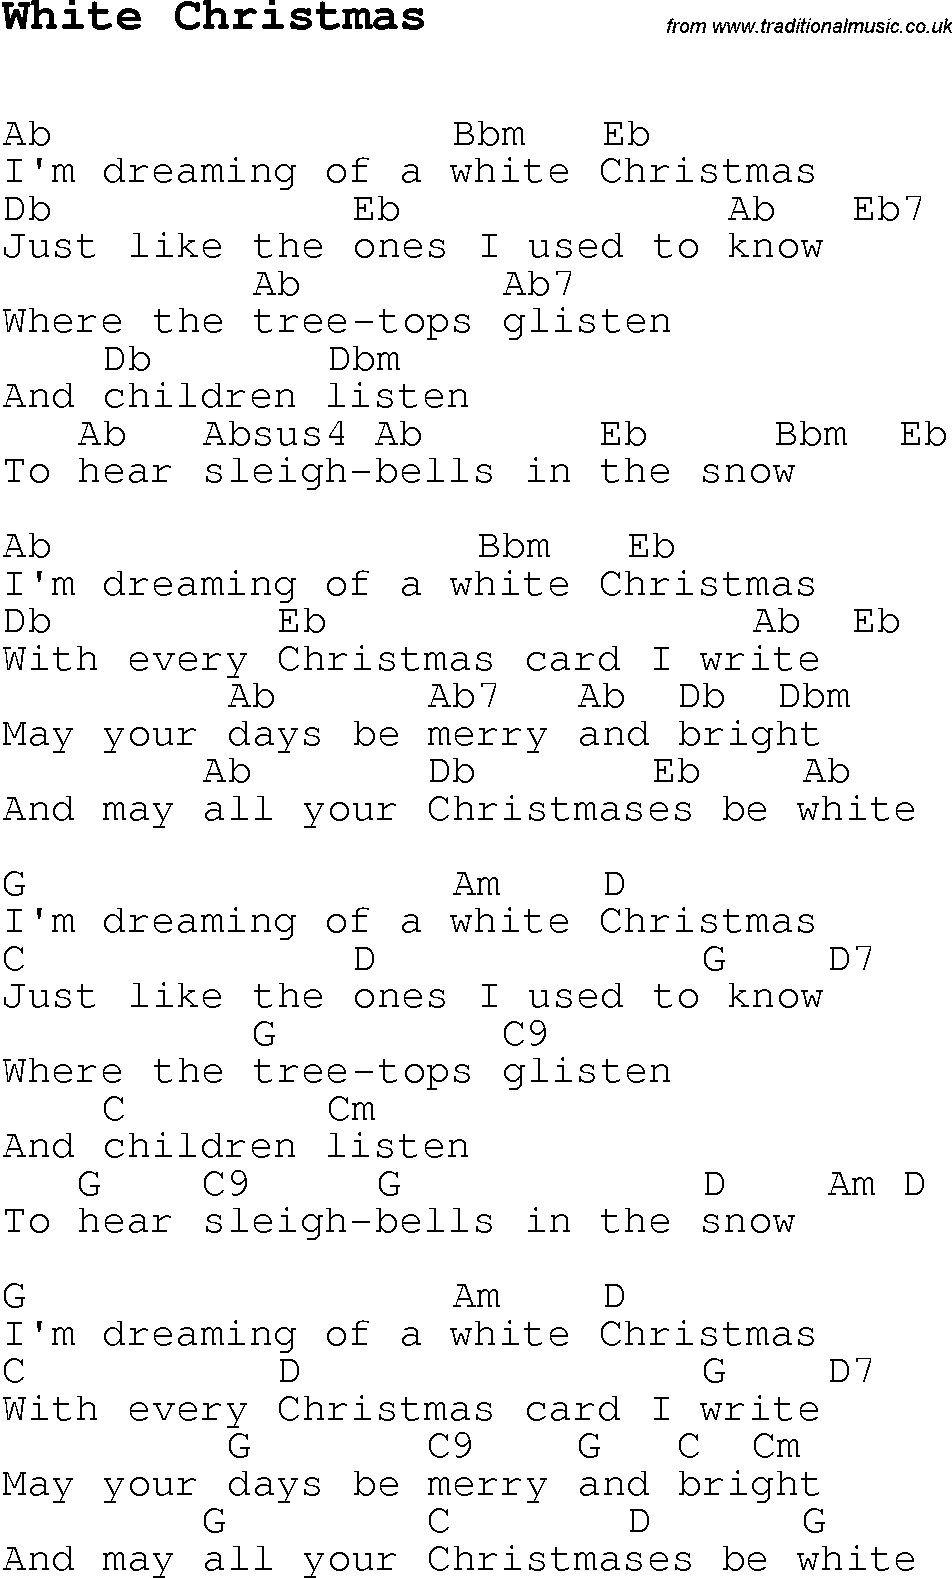 Christmas Carol/Song lyrics with chords for White Christmas